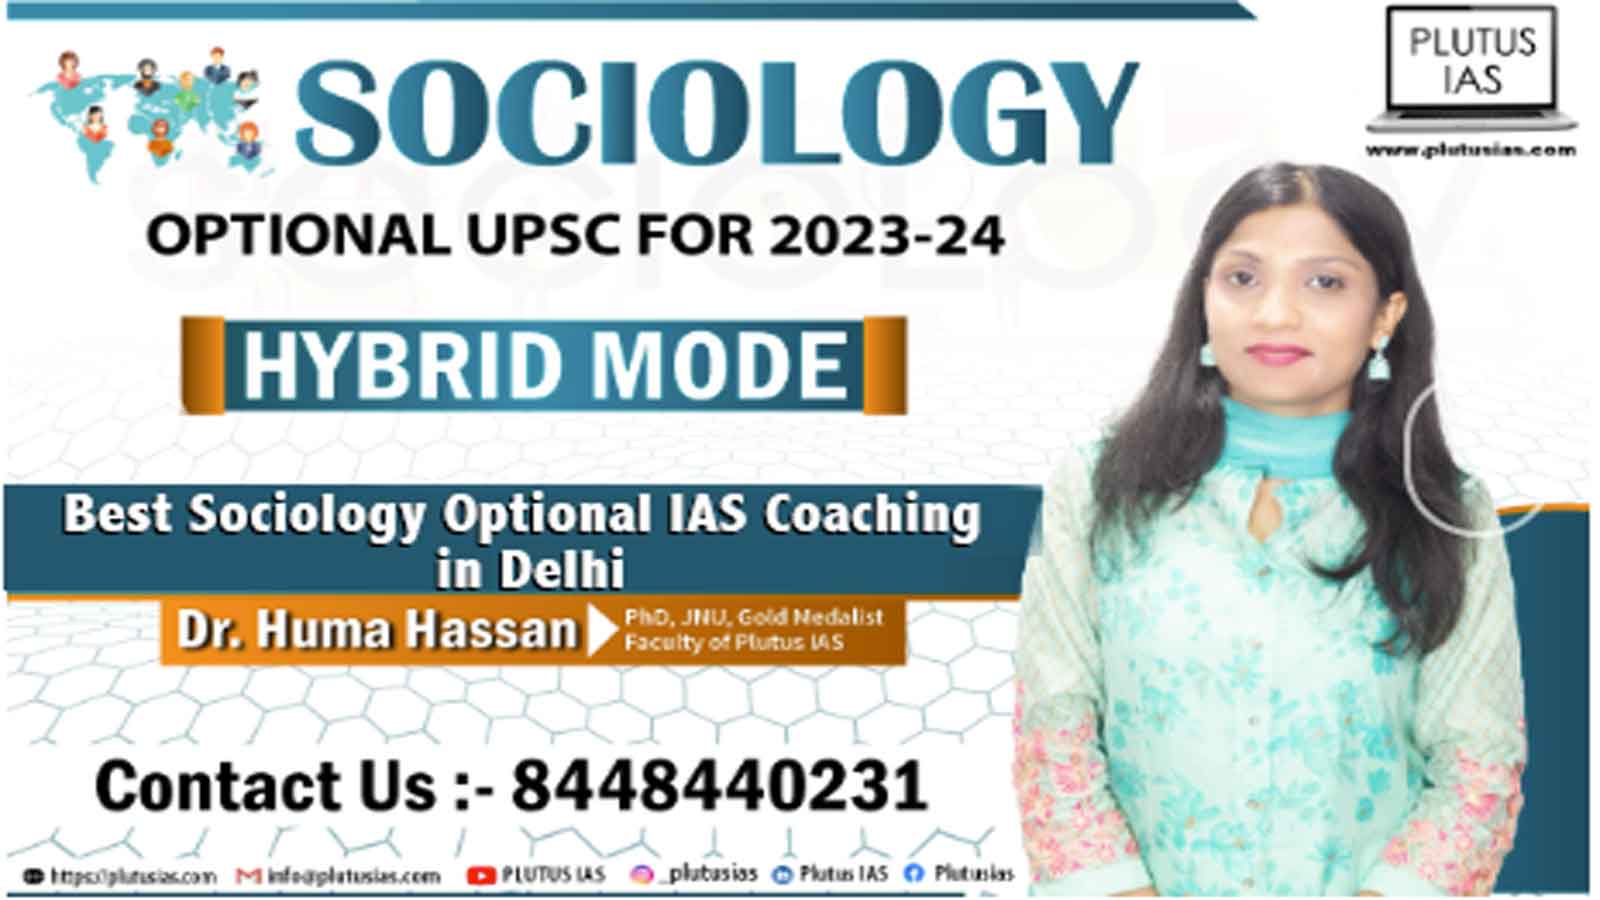 Top Sociology Optional IAS Coaching in Delhi 2023